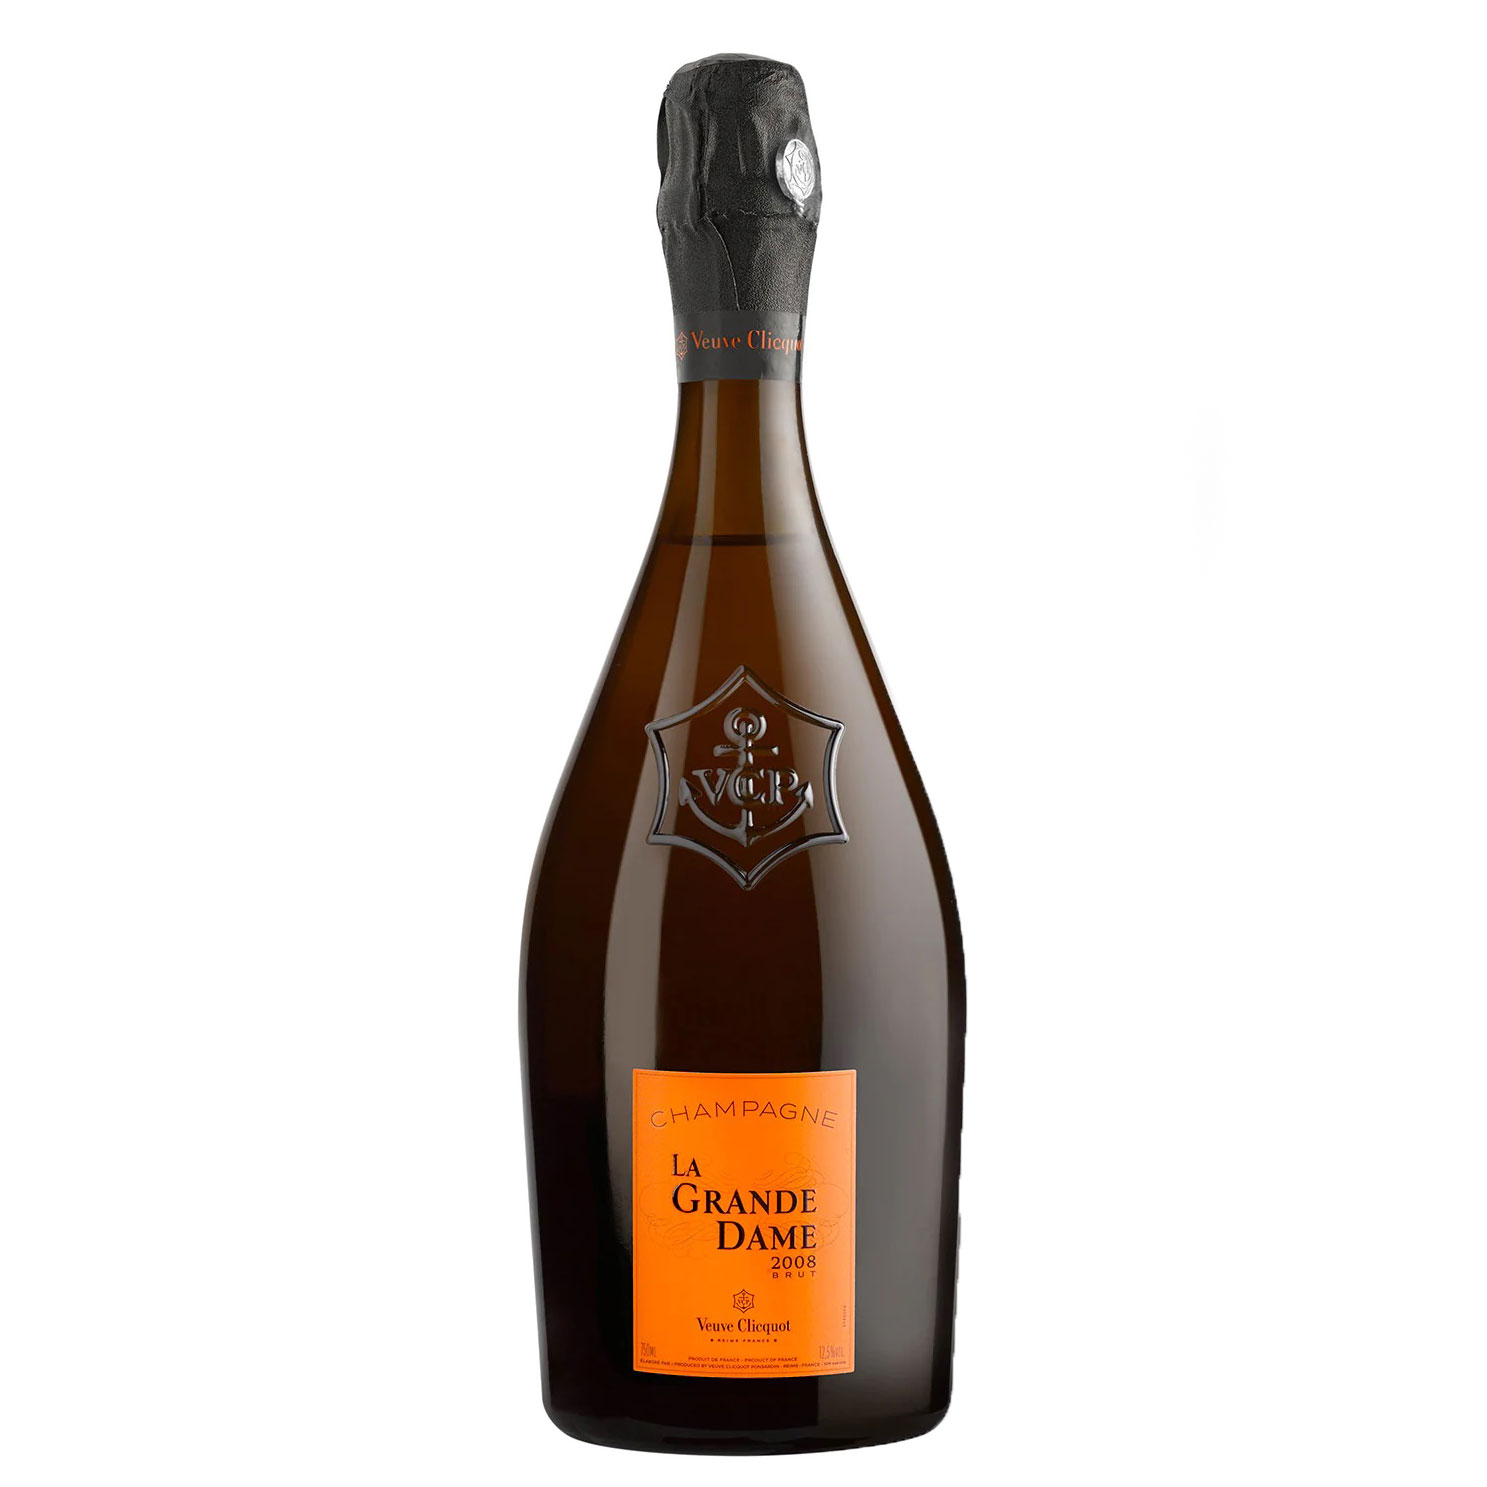 Send La Grande Dame 2008 Vintage Champagne by Veuve Clicquot - Gift Boxed Online